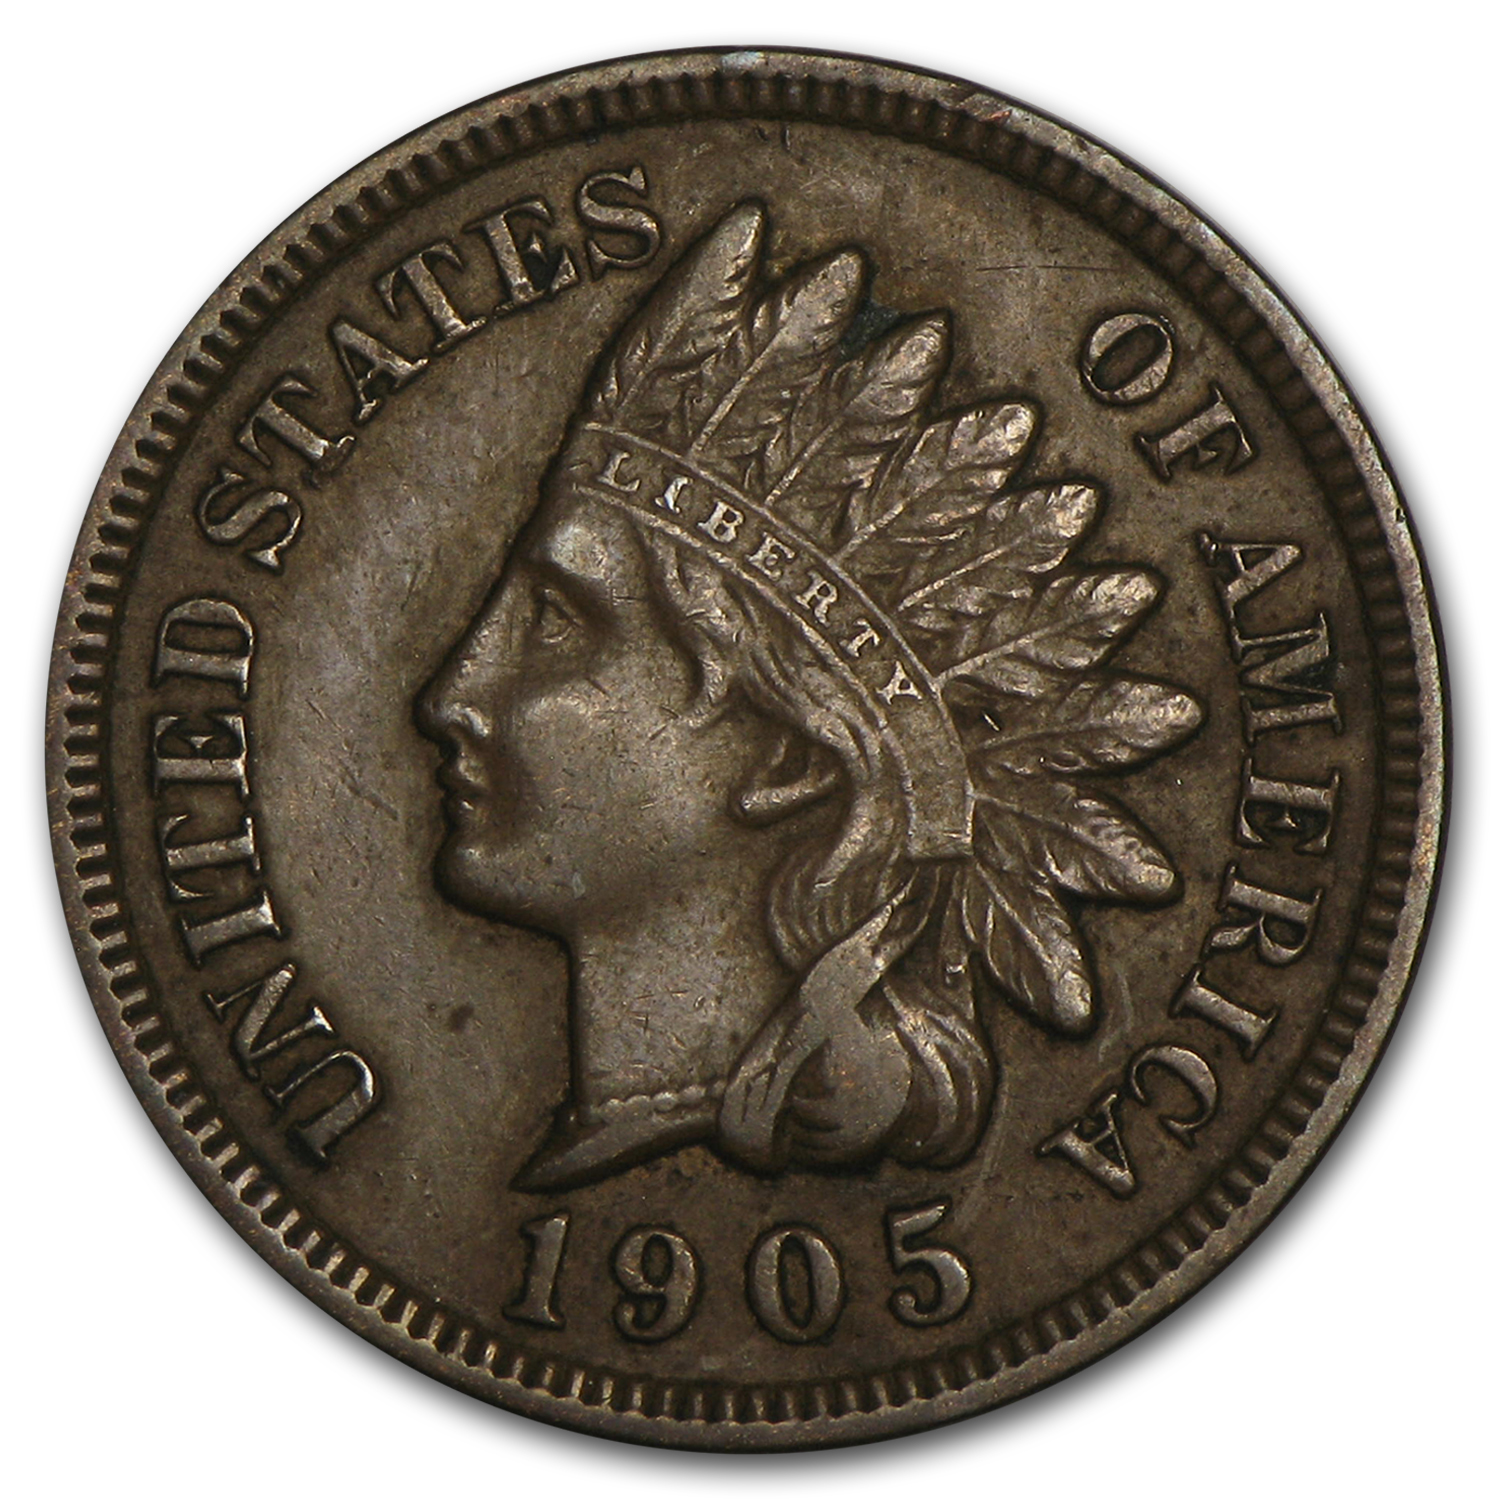 Buy 1905 Indian Head Cent AU